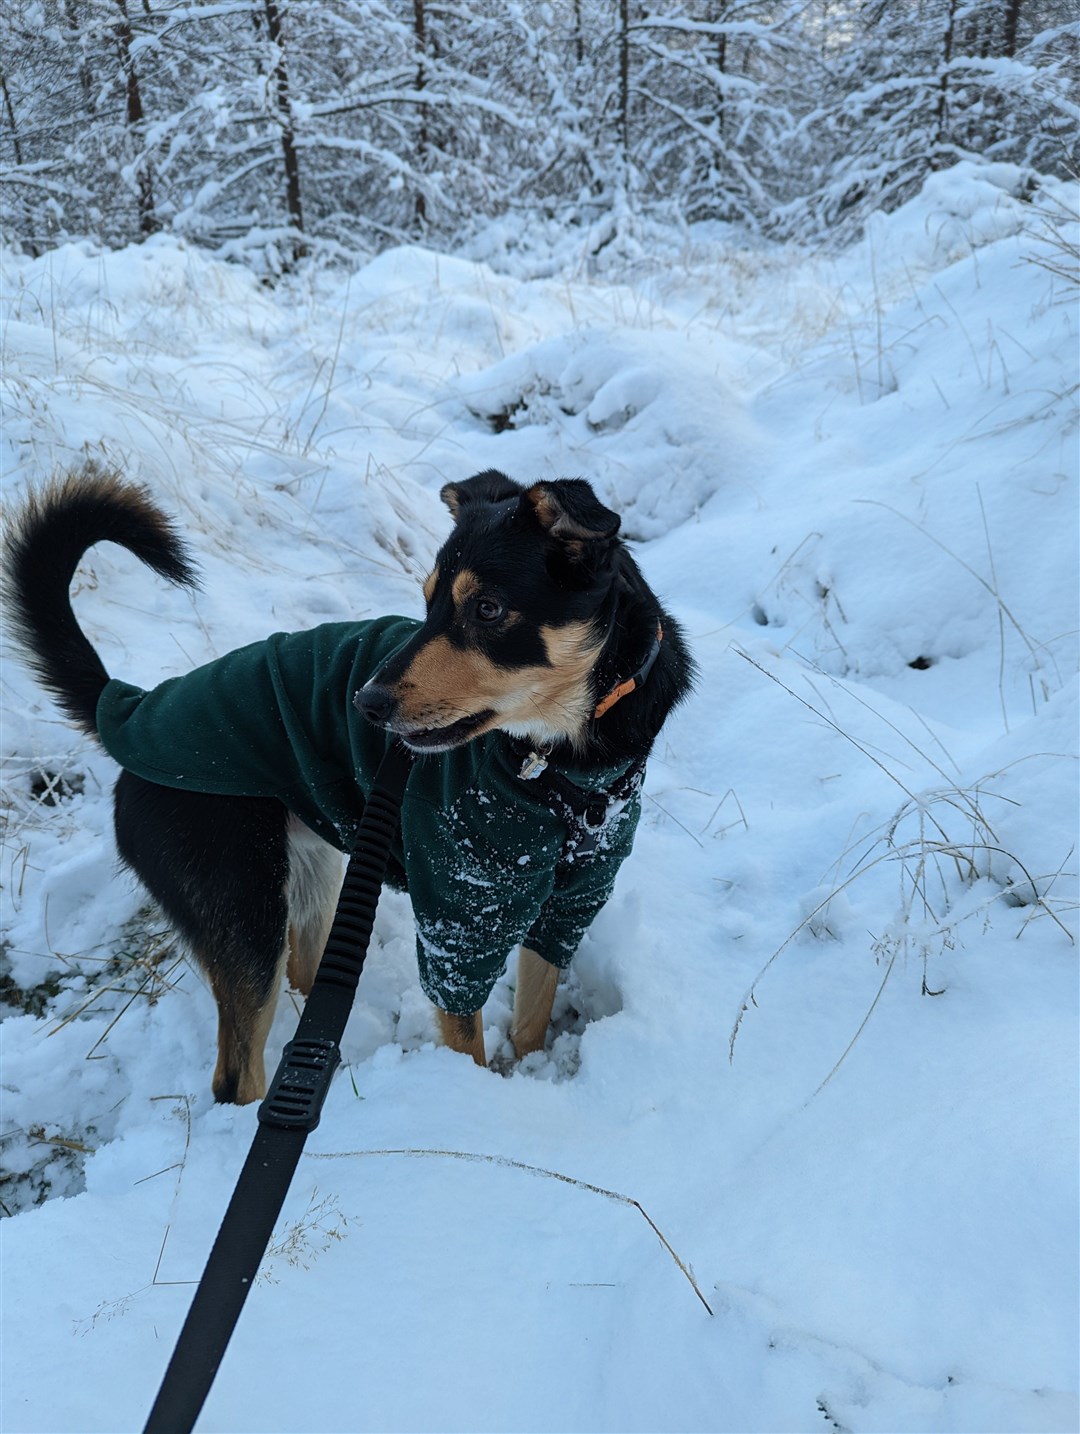 Gemma Philip took this photo of Trig enjoying snow at Daviot woods.